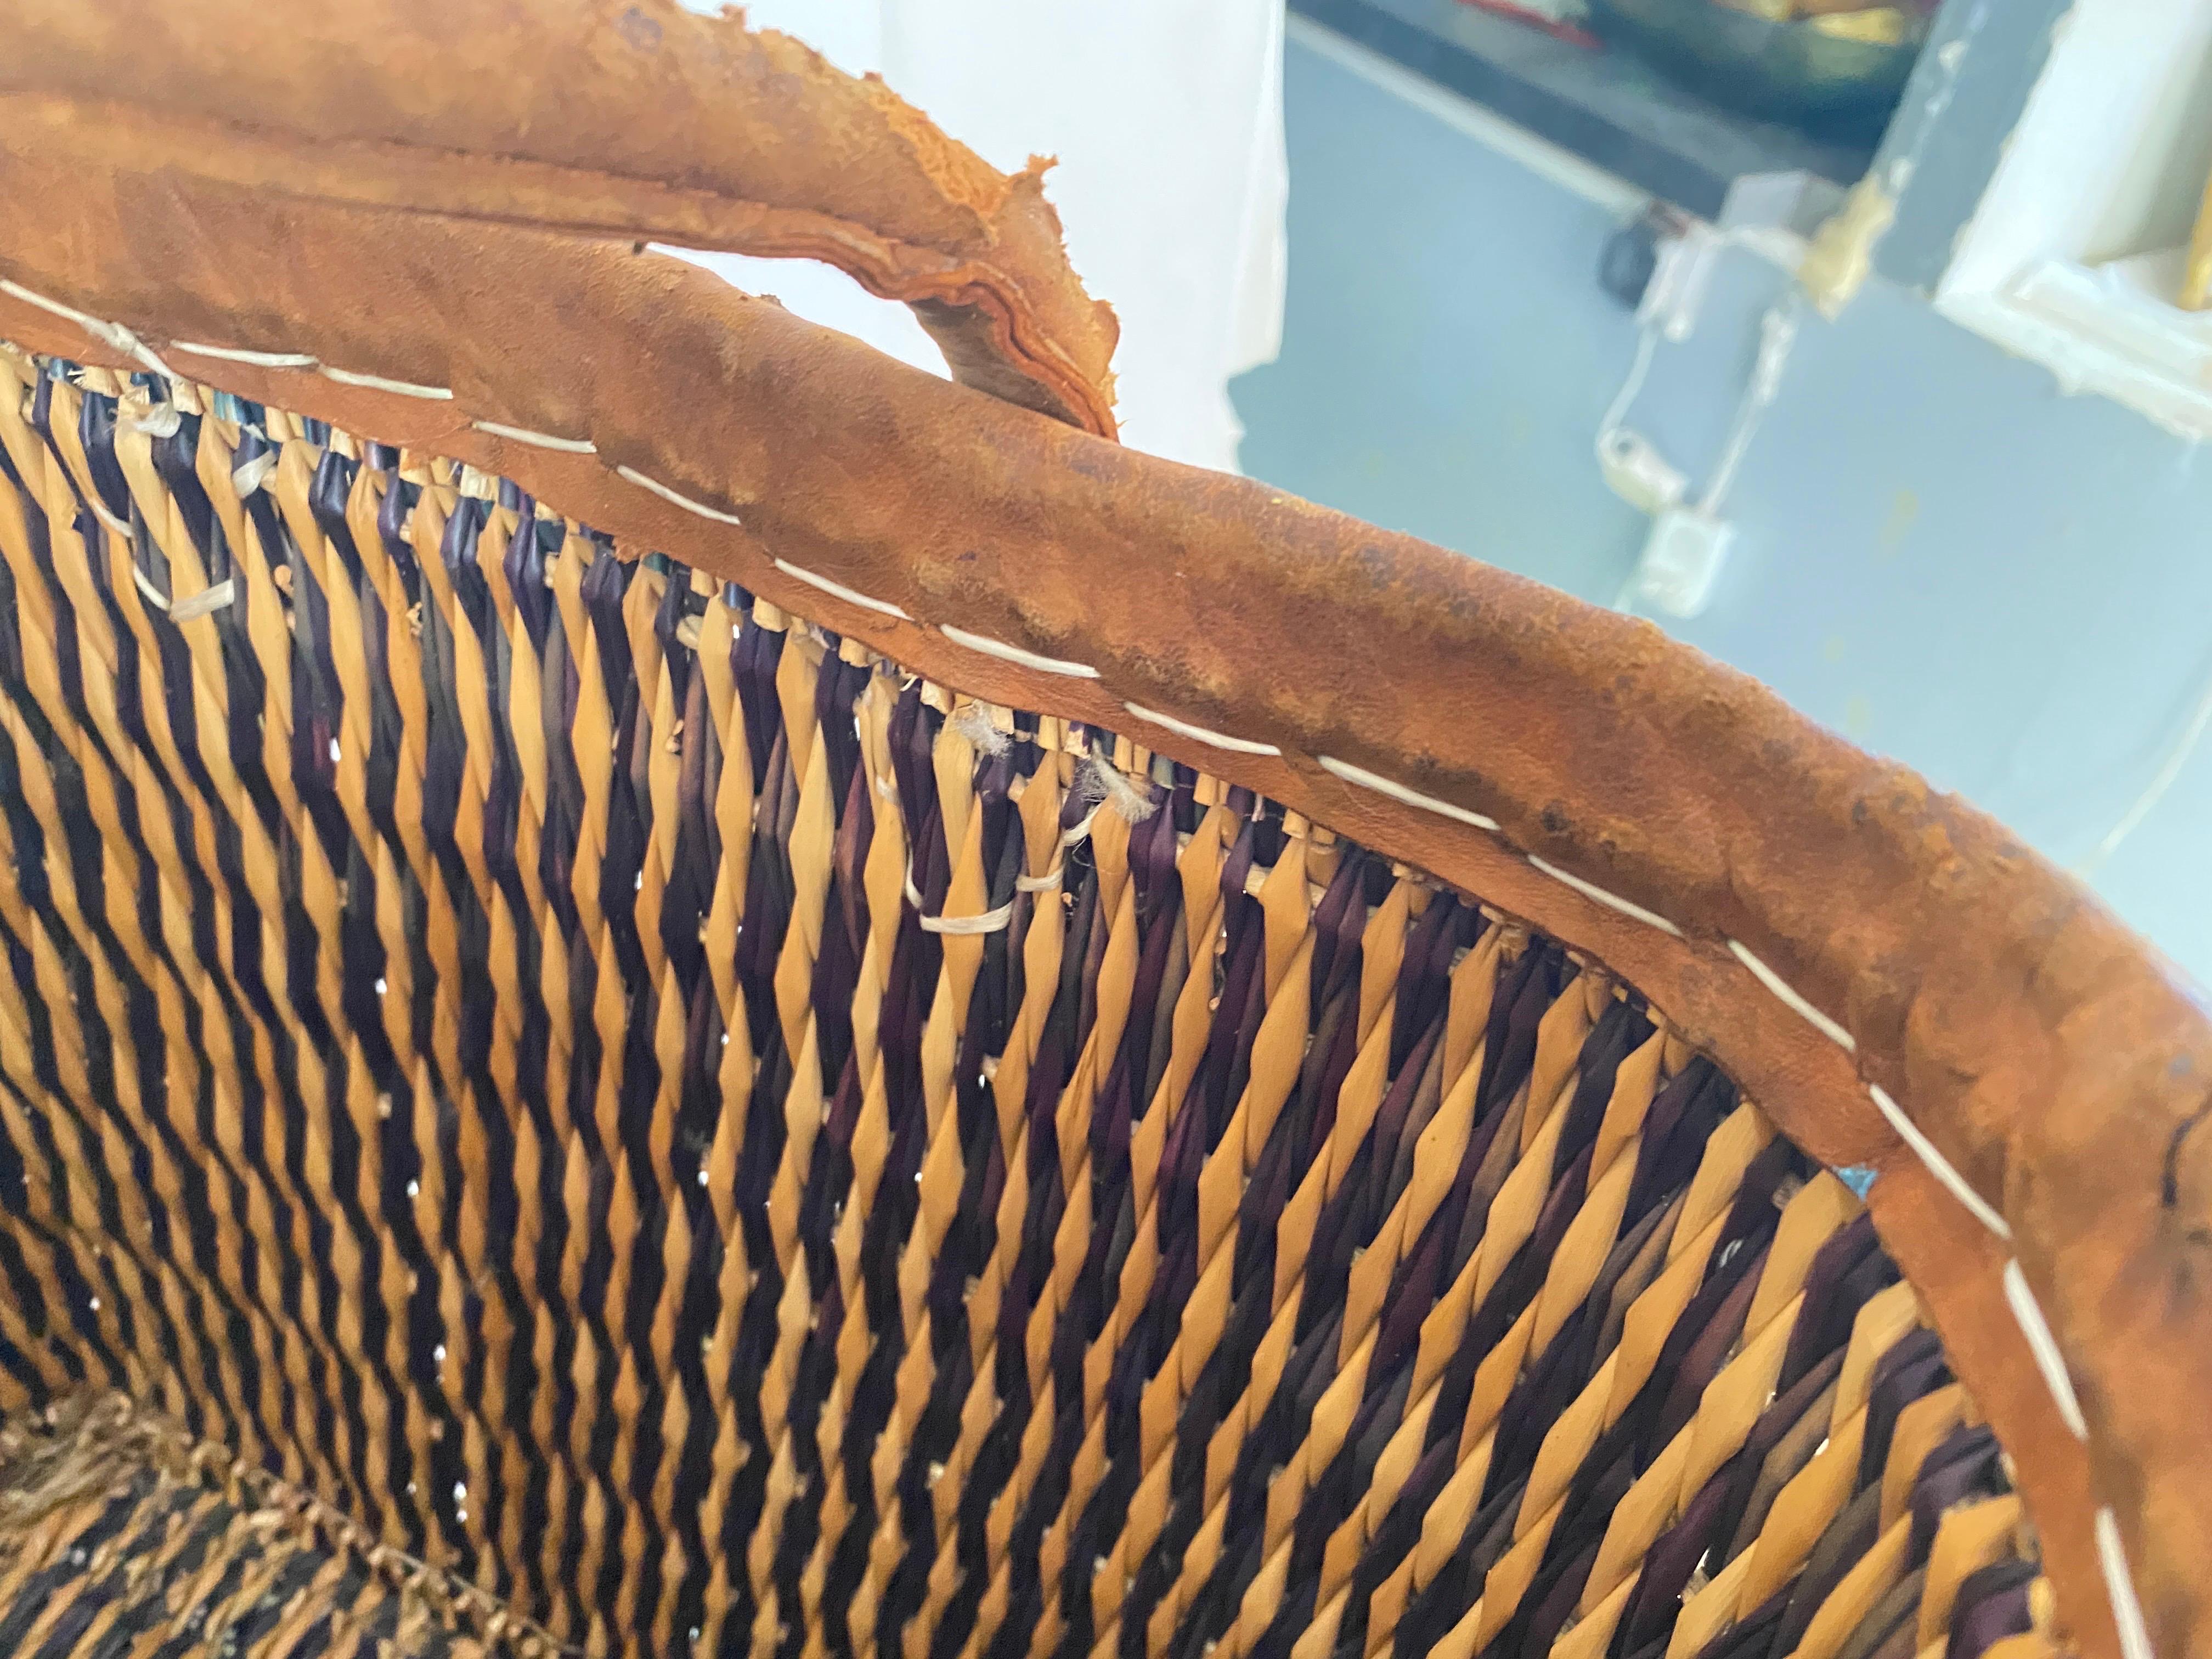 Vintage French Wicker Basket, Gold Color Stitched Leather Bag Handles France For Sale 3